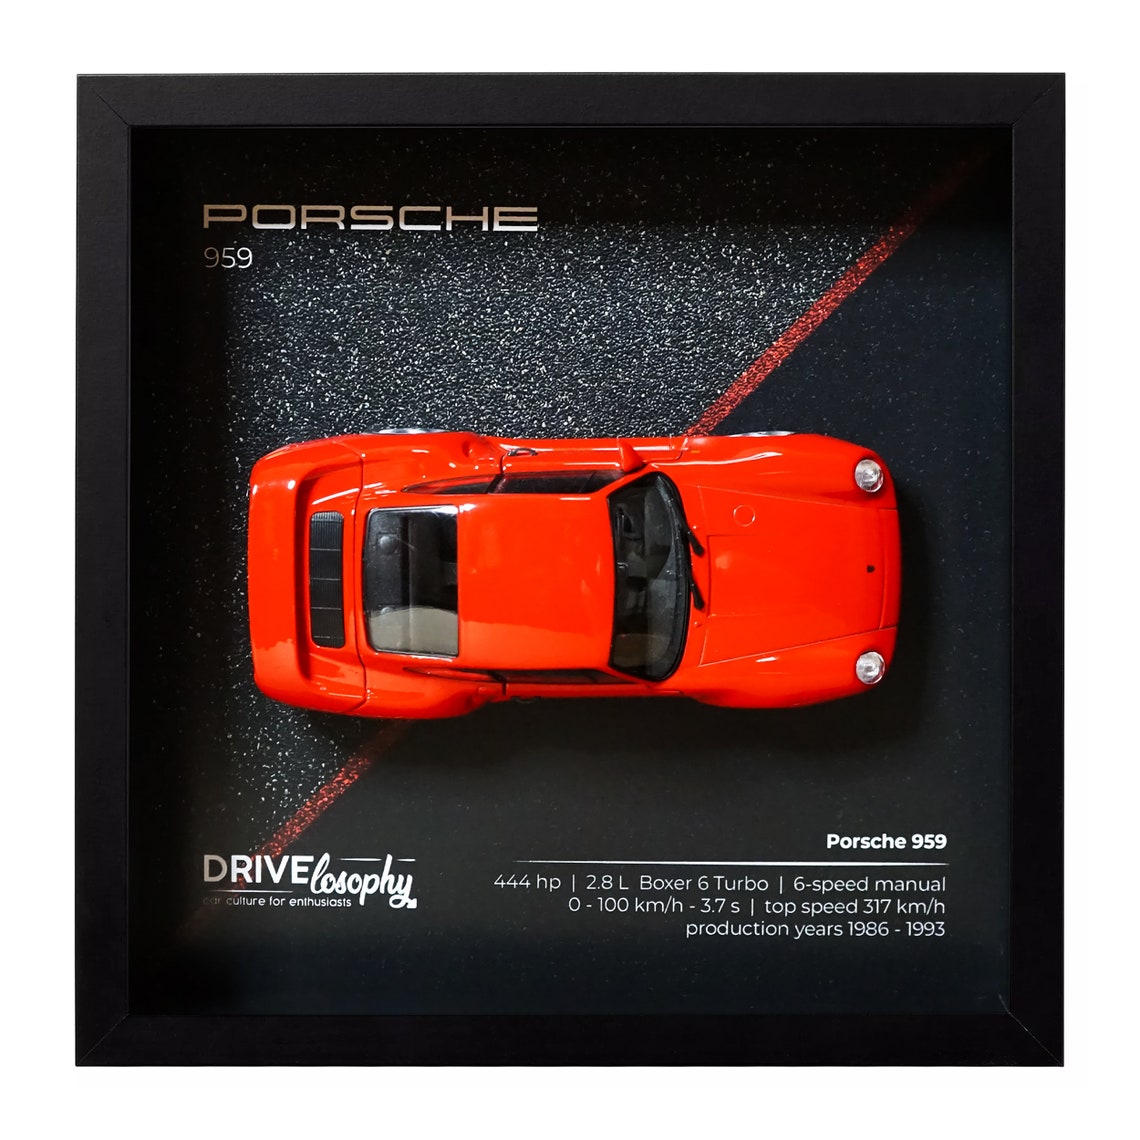 Porsche 959 3D Frame the Ideal Gift - Etsy